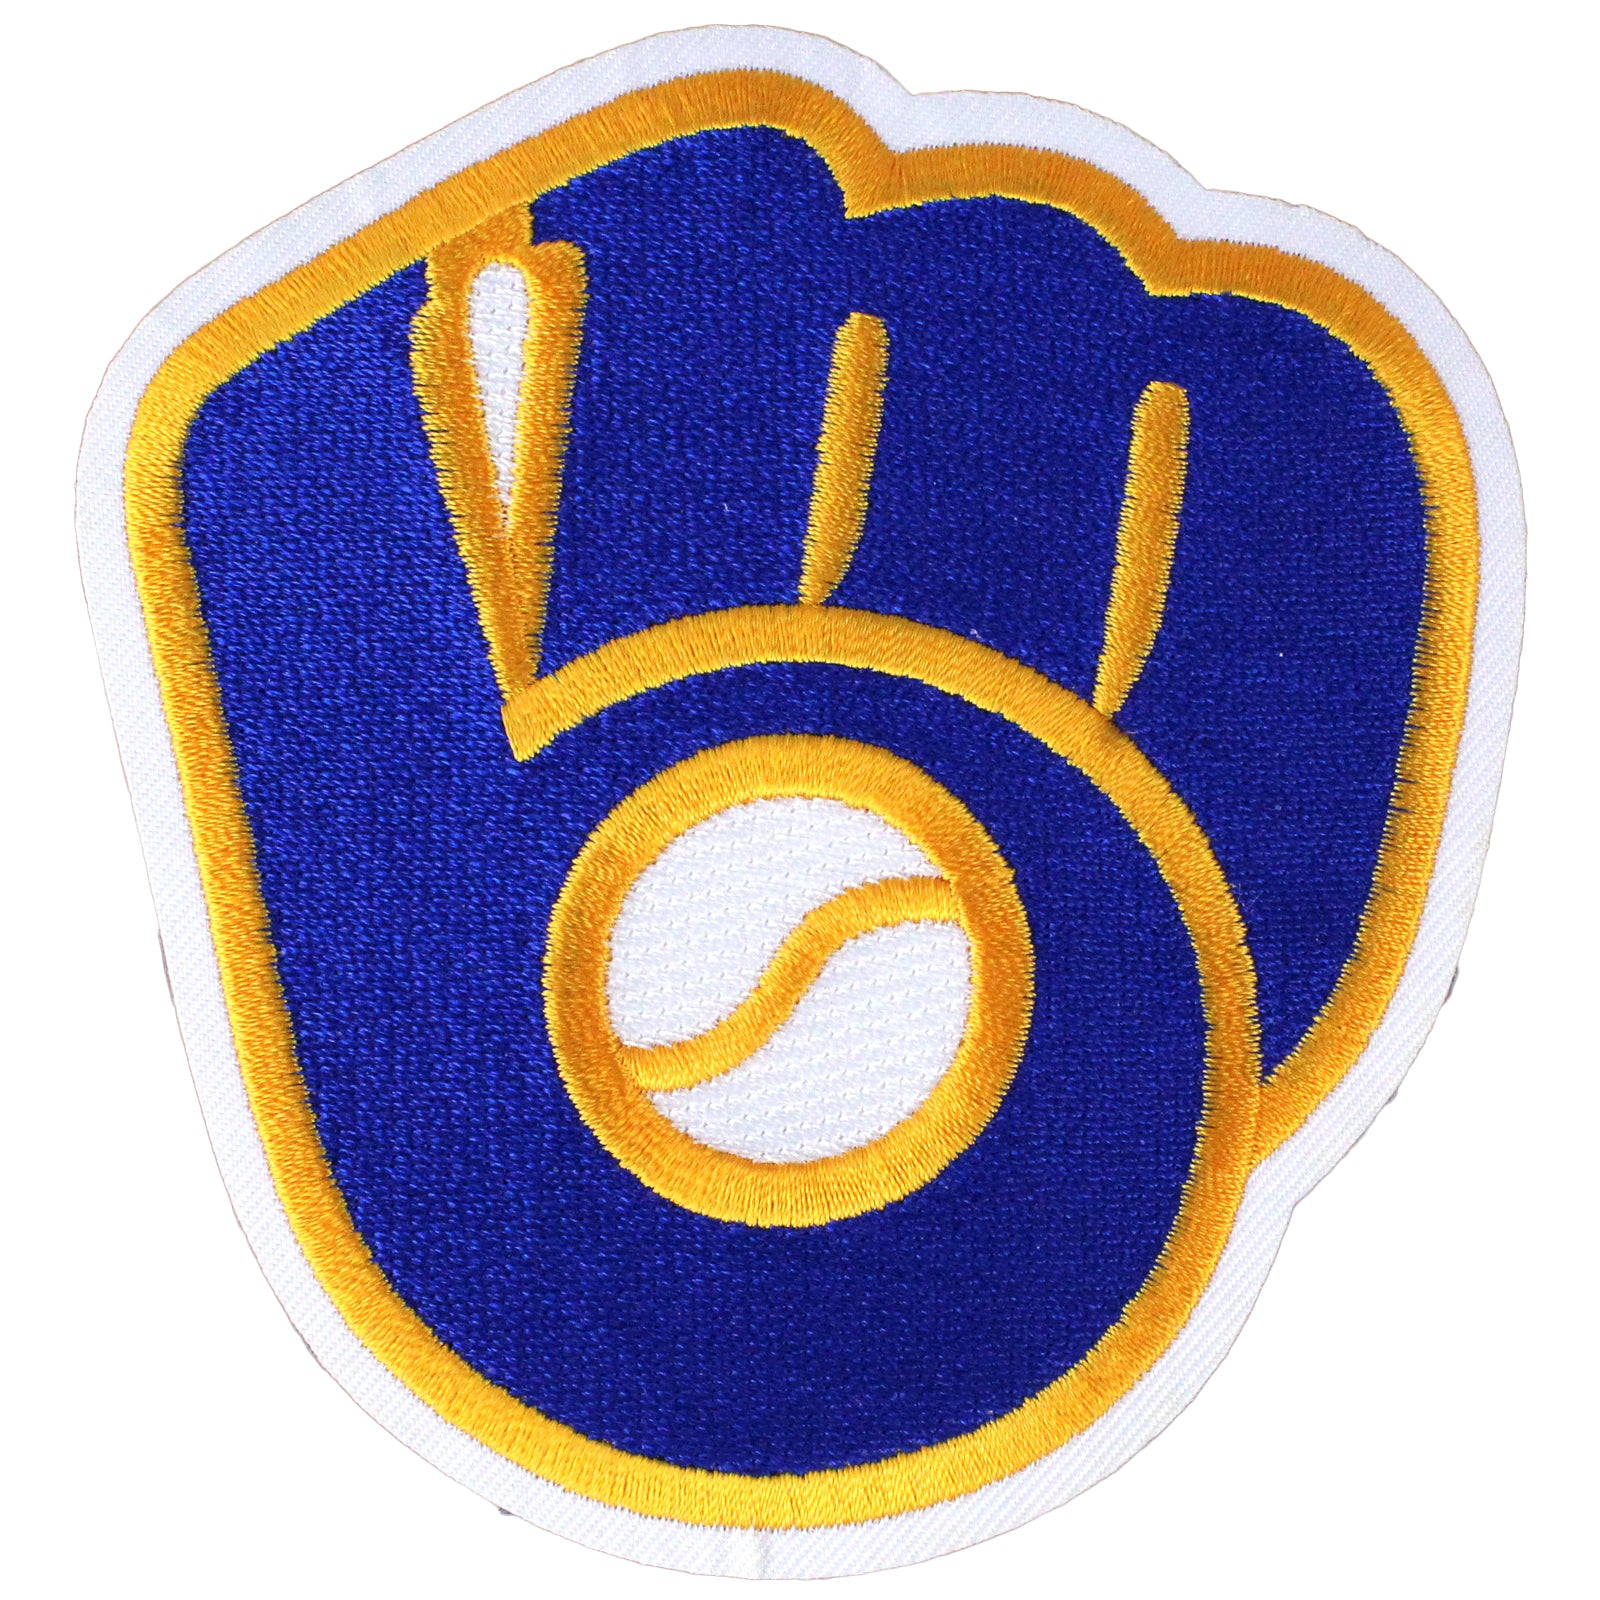 For 50th anniversary season, Brewers bring back popular glove logo